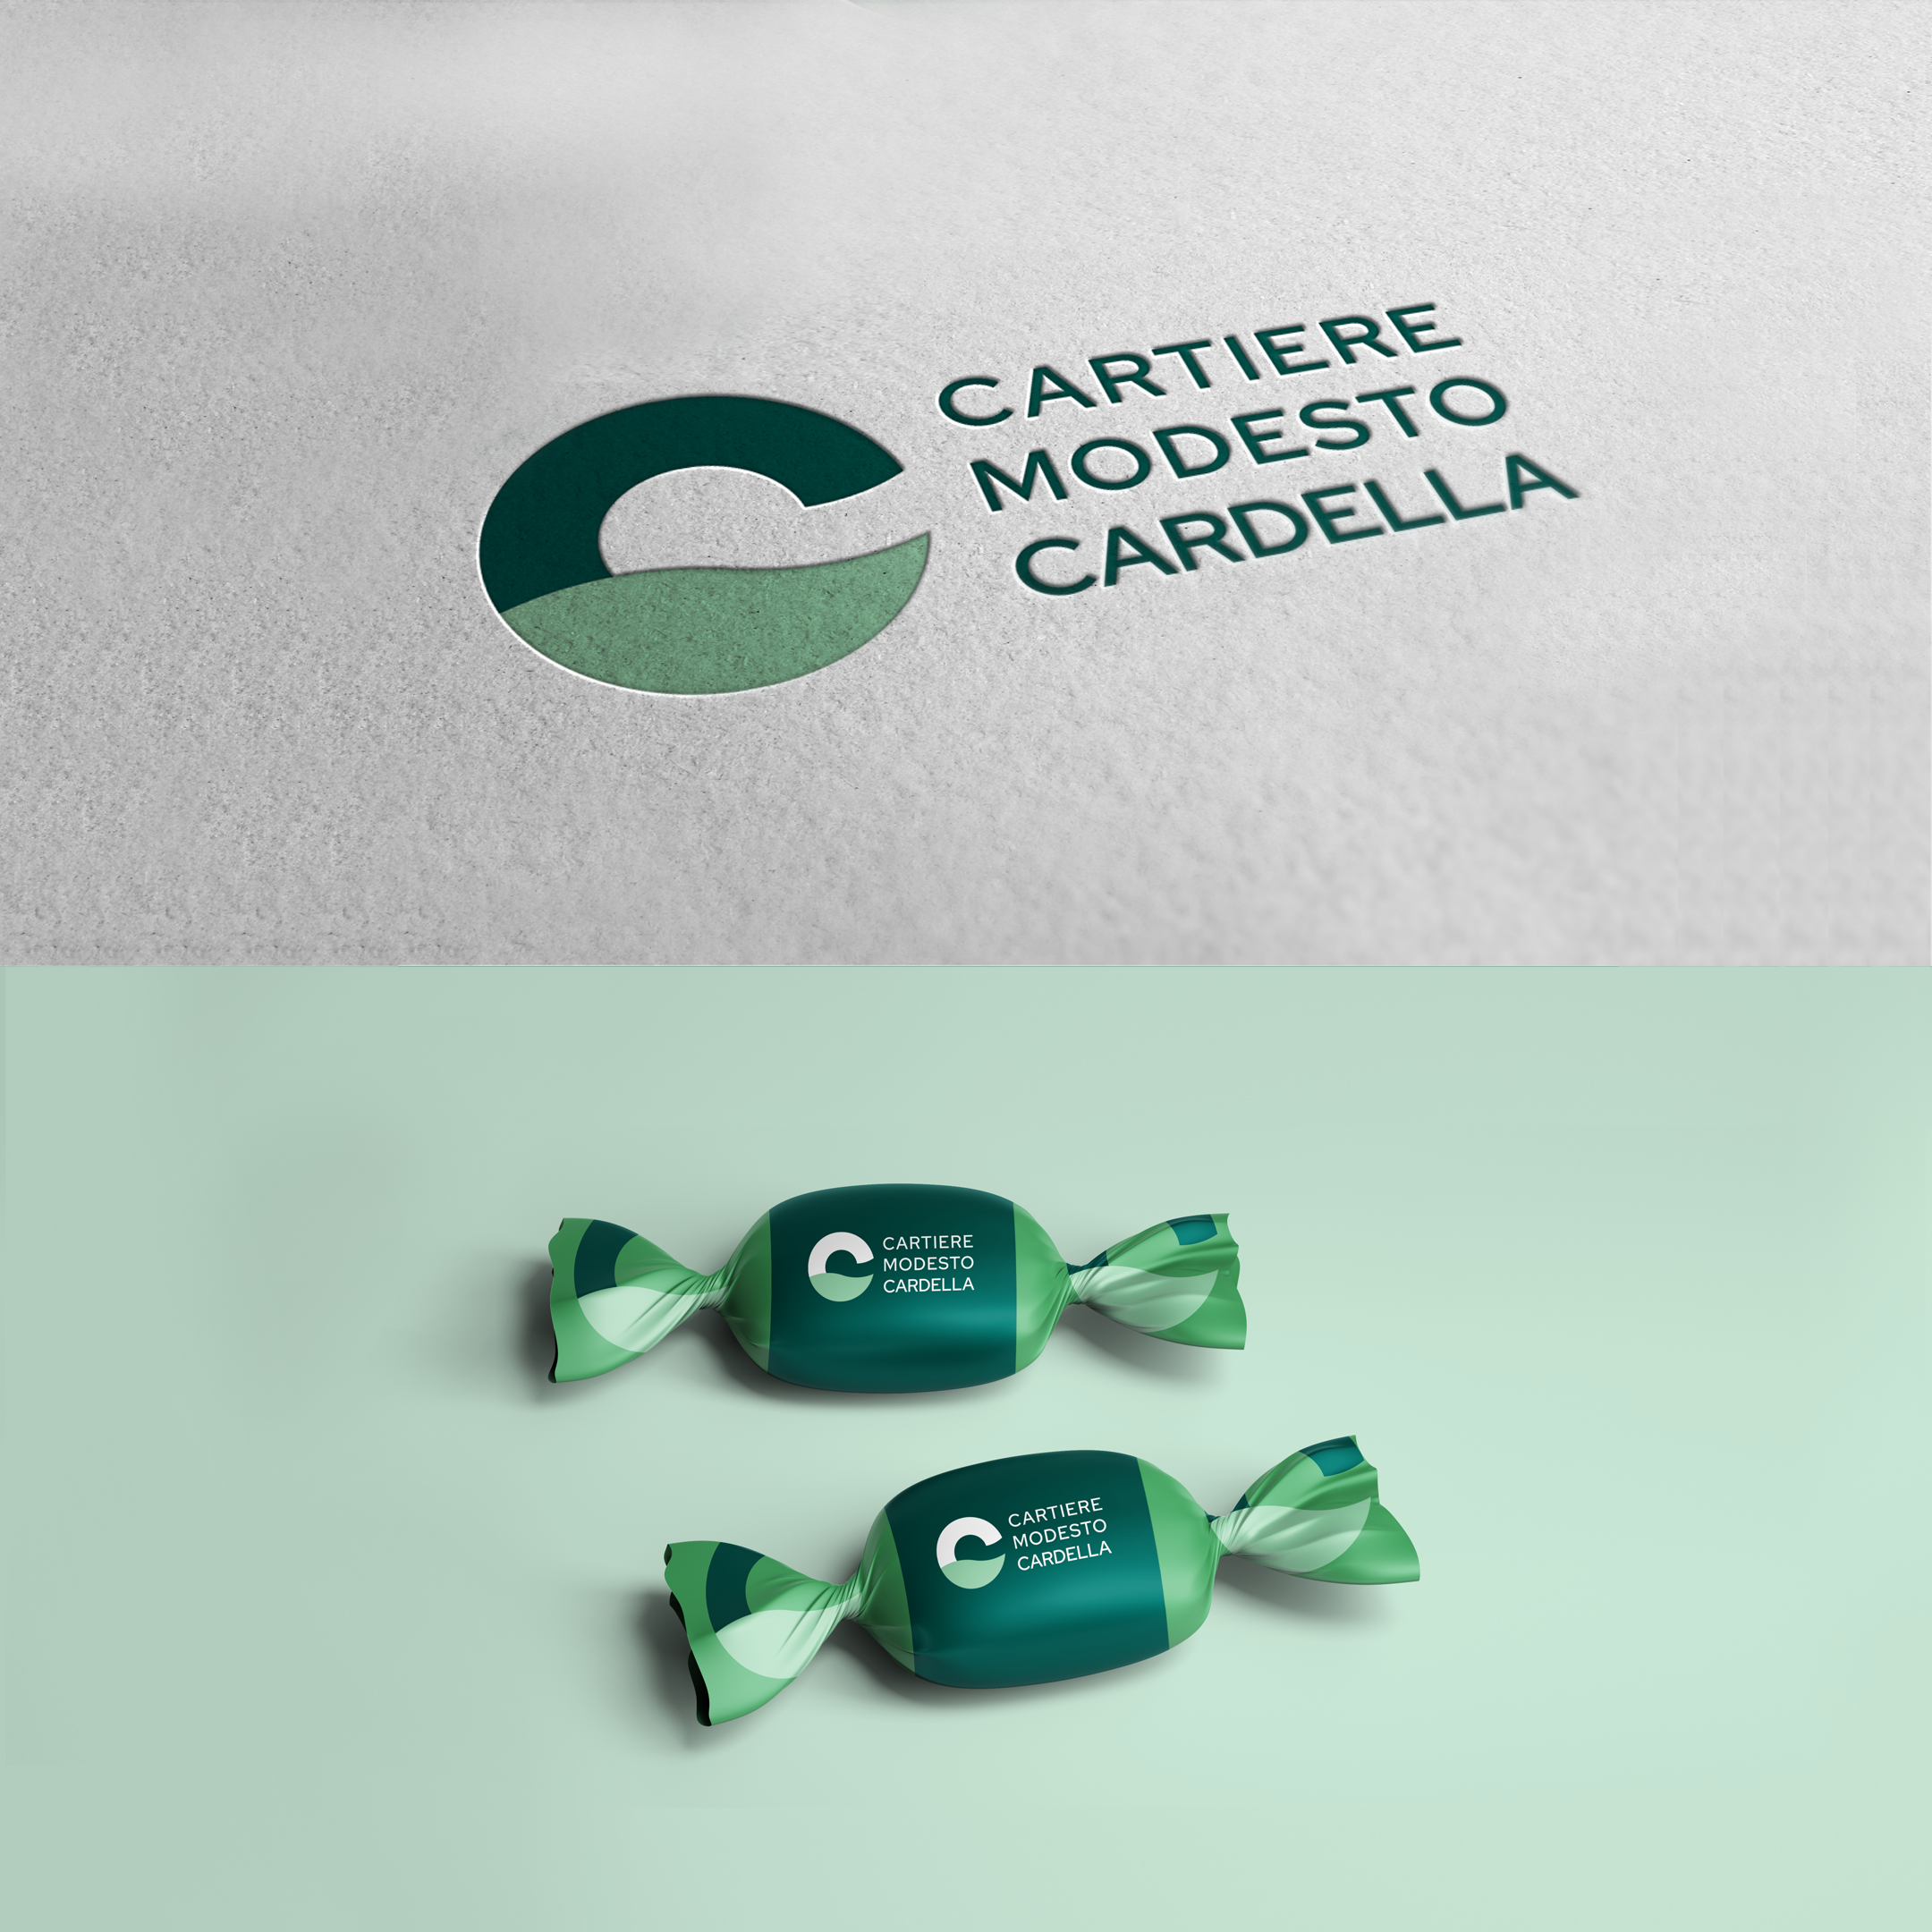 Logo - Cartiera Modesto Cardella